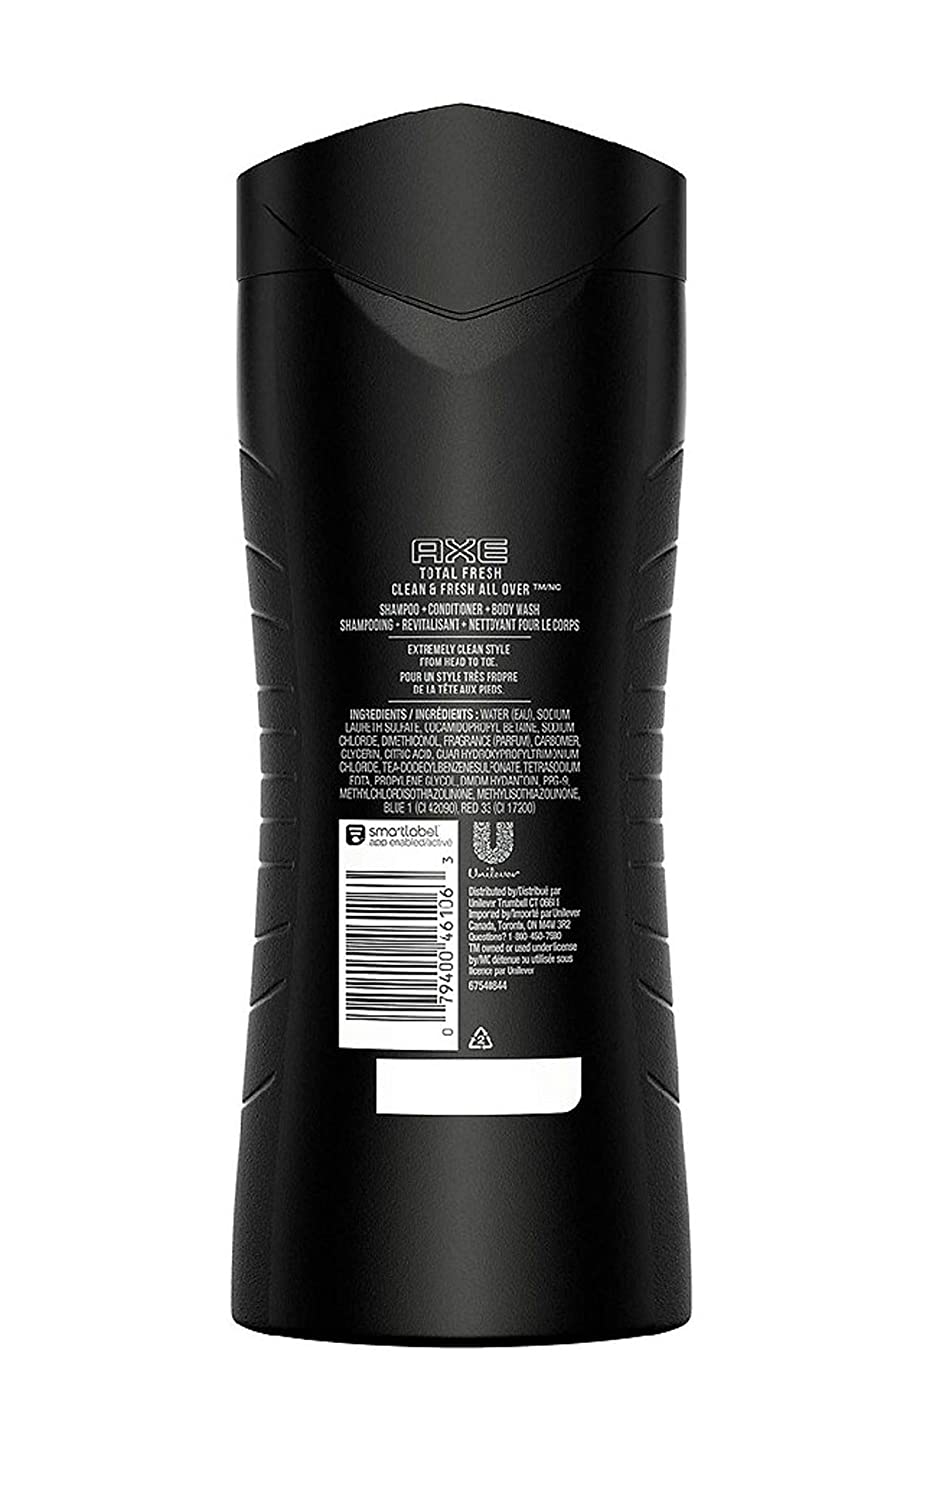 Axe Hair 3 in 1 - Total Fresh - Shampoo + Conditioner + Body Wash - Net Wt. 16 FL OZ (473 mL) Per Bottle - Pack of 3 Bottles